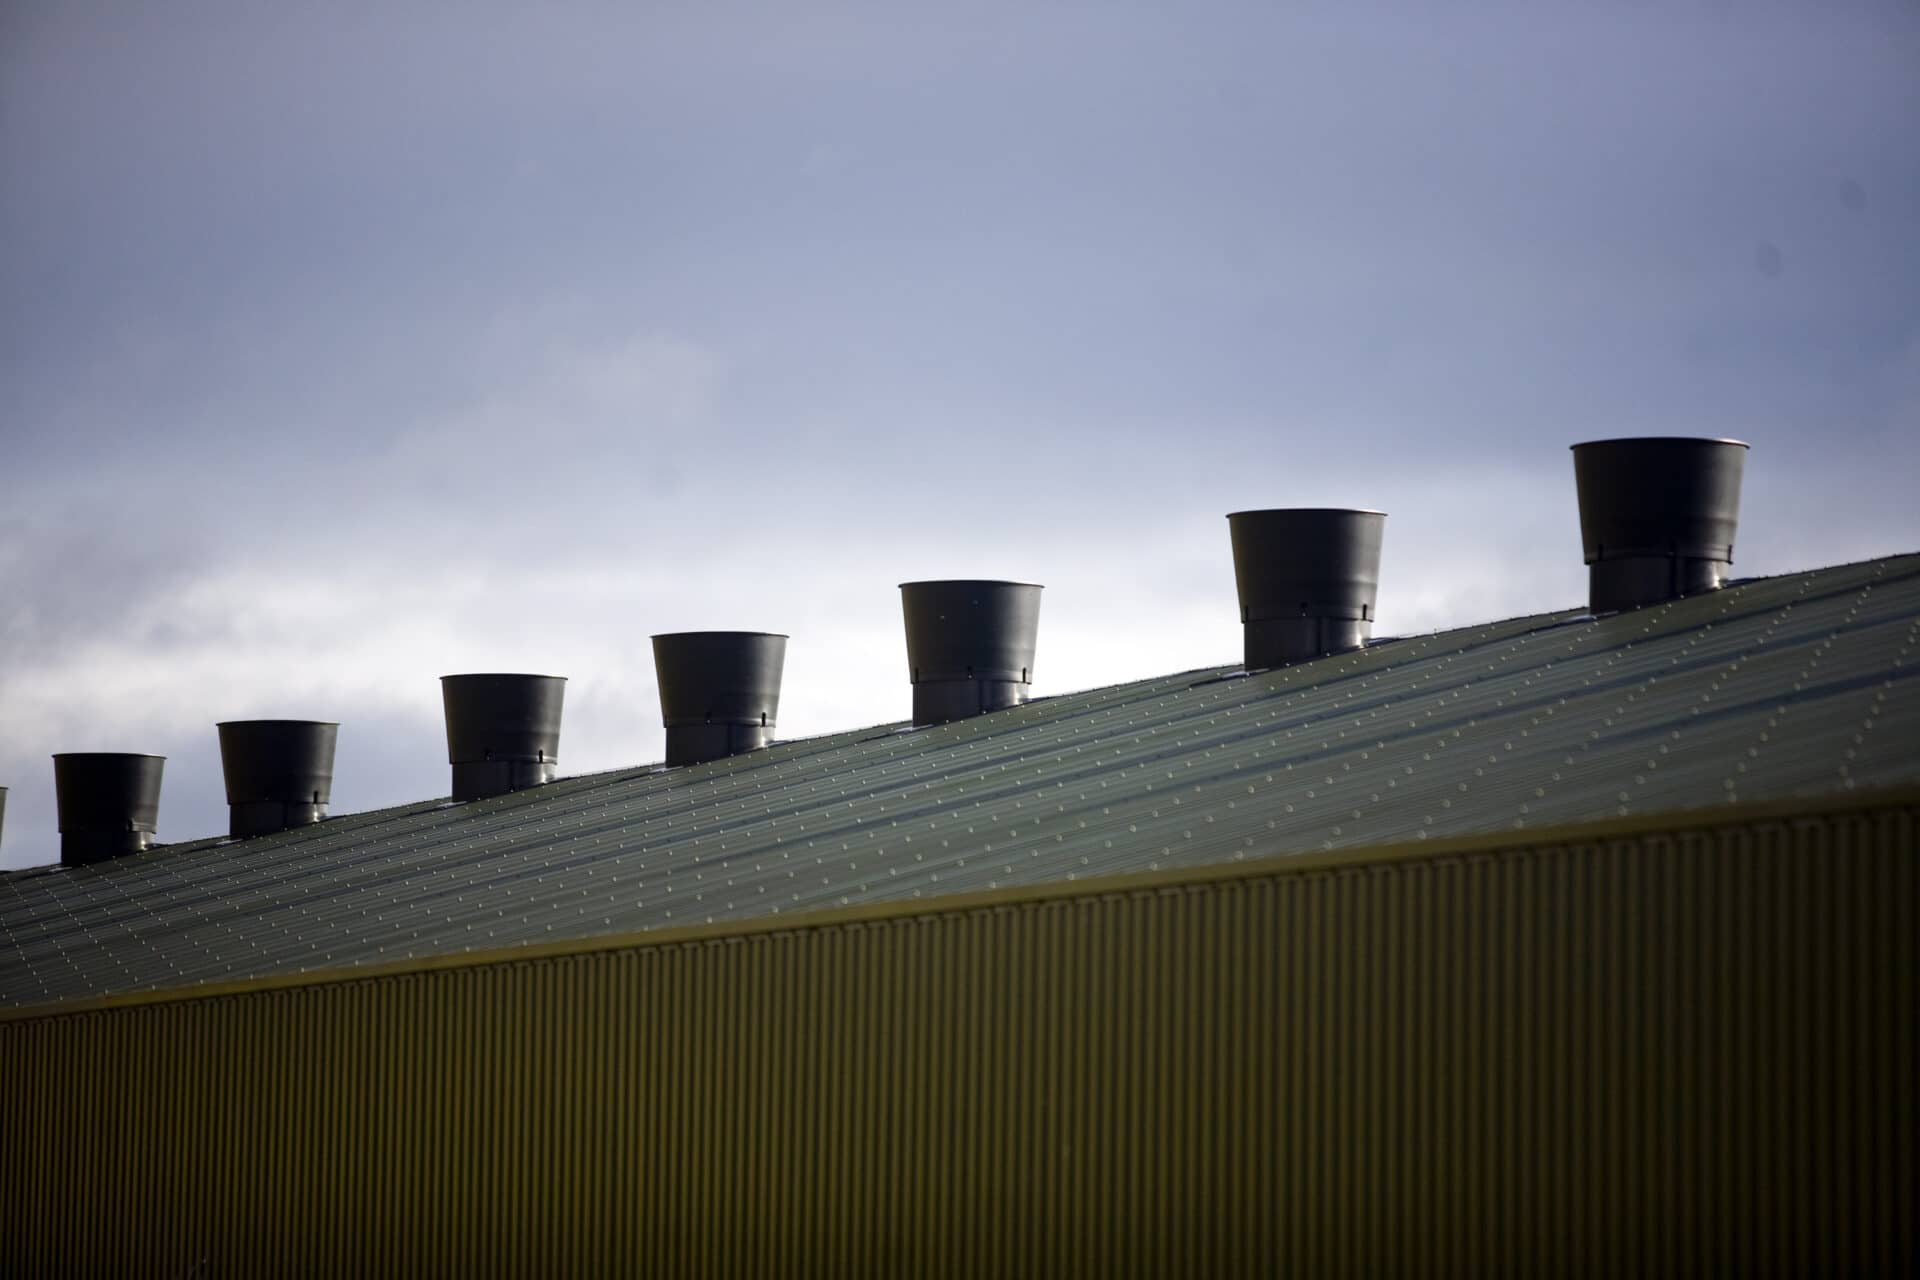 Rain cones on ventilation chimneys